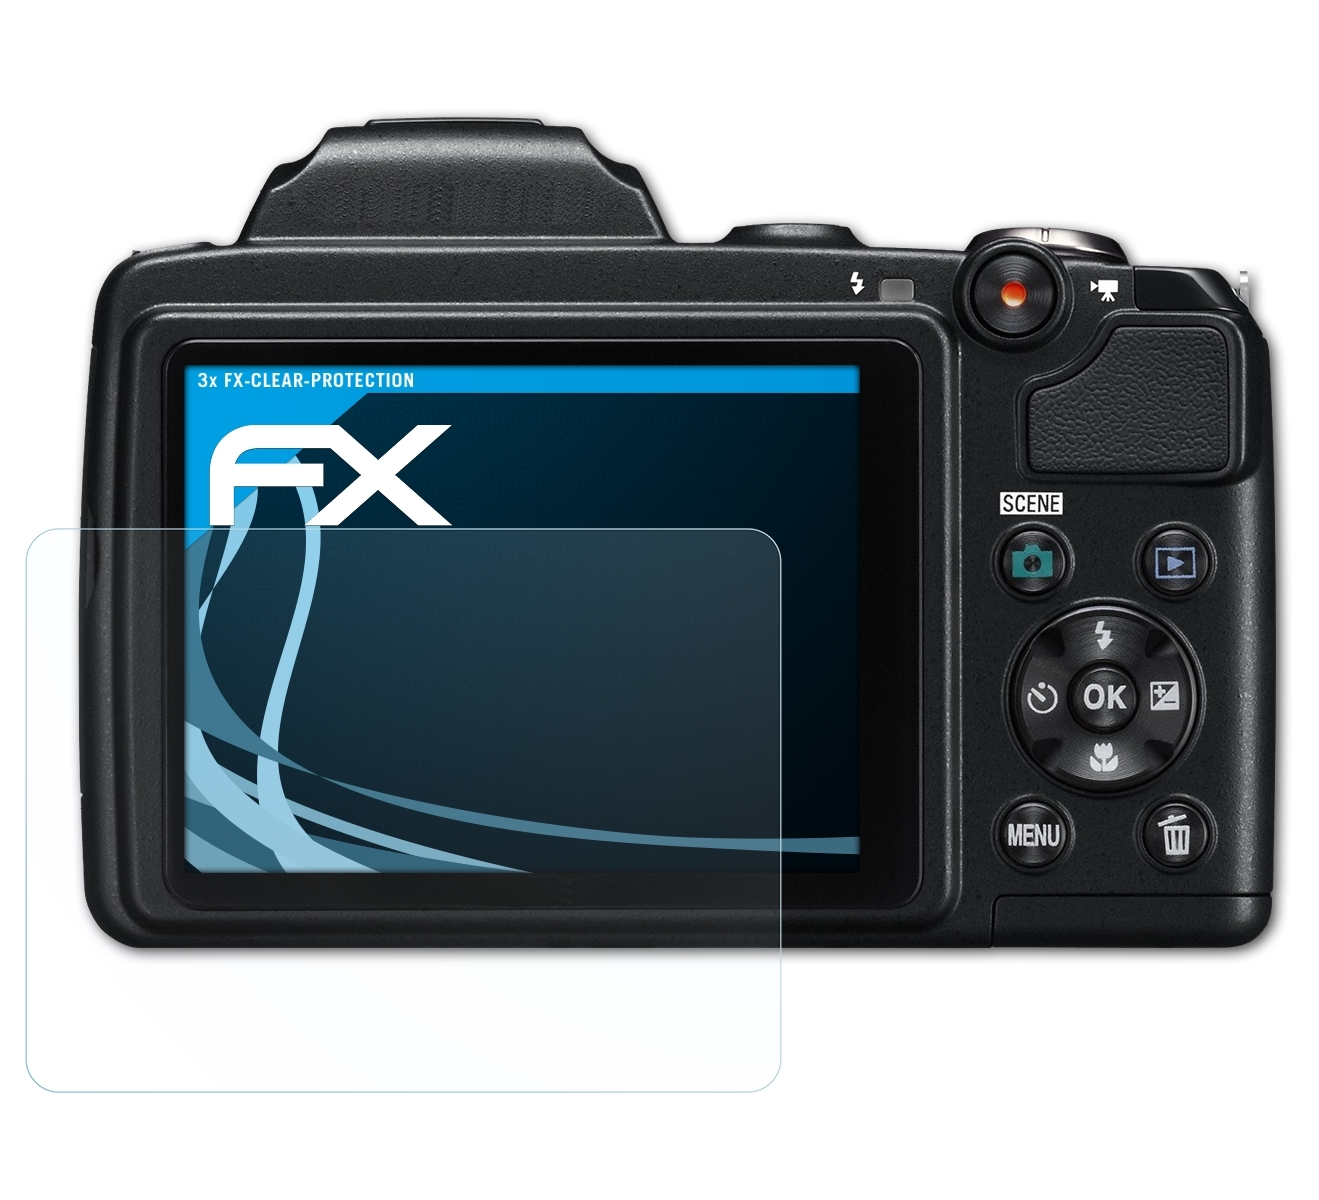 ATFOLIX Displayschutz(für 3x Nikon FX-Clear Coolpix L310)